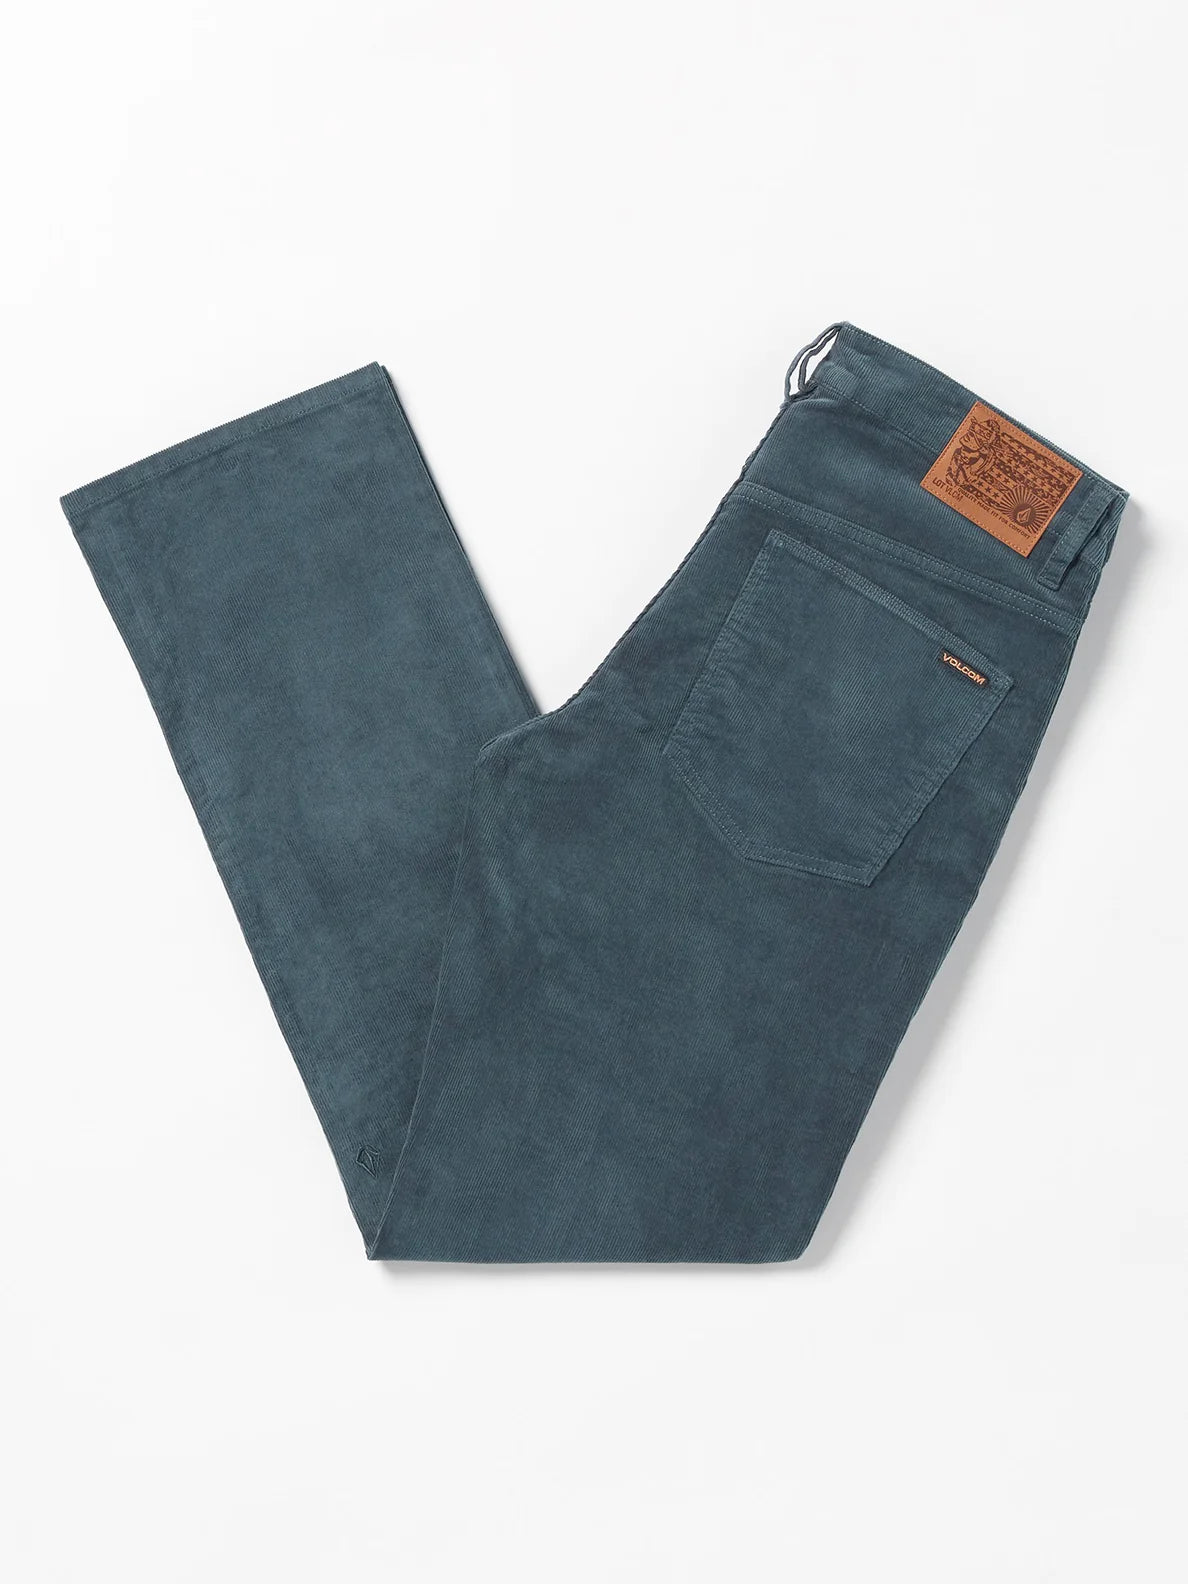 Volcom Solver 5 Pocket Corduroy Modern Fit Pants - Dark Slates